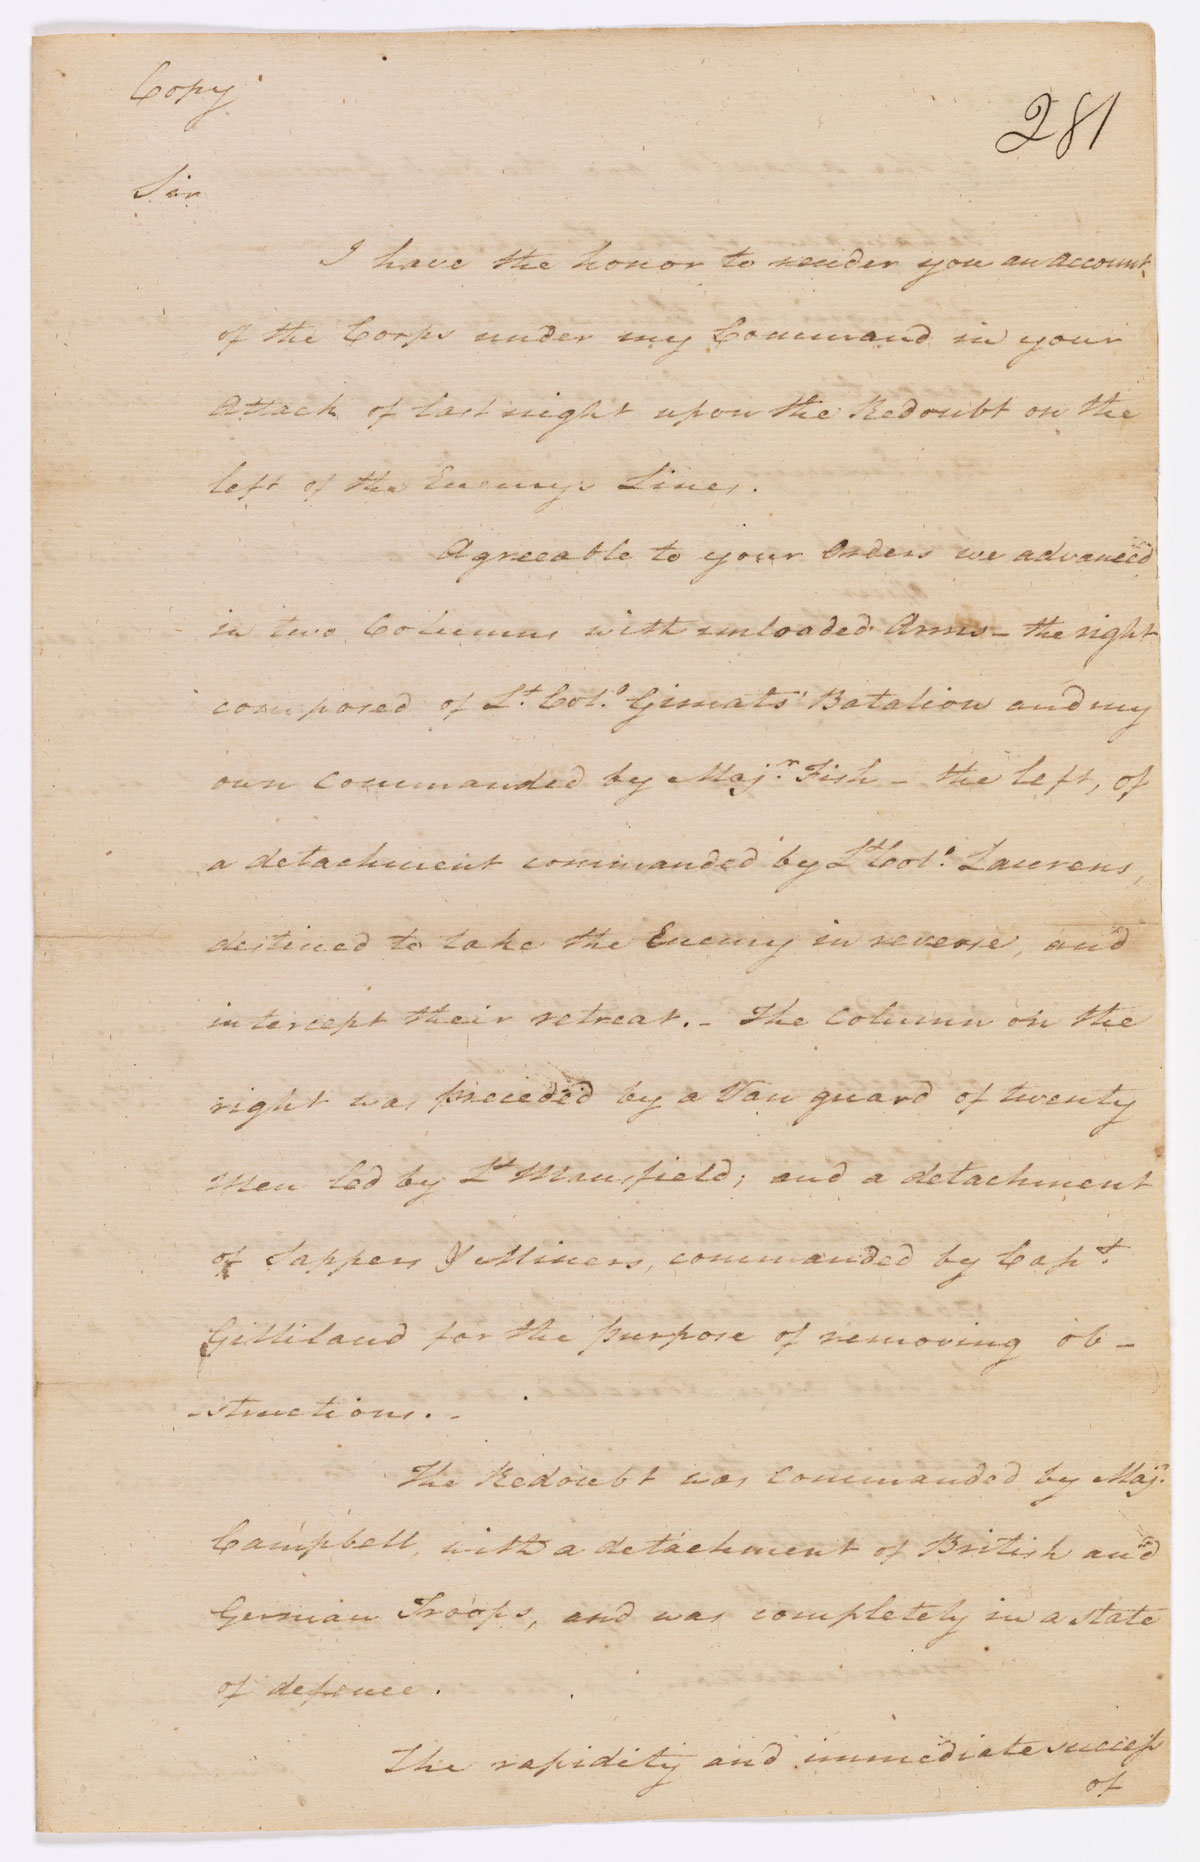 Copy of Alexander Hamilton’s letter to Marquis de Lafayette describing his actions at the Battle of Yorktown, October 15, 1781